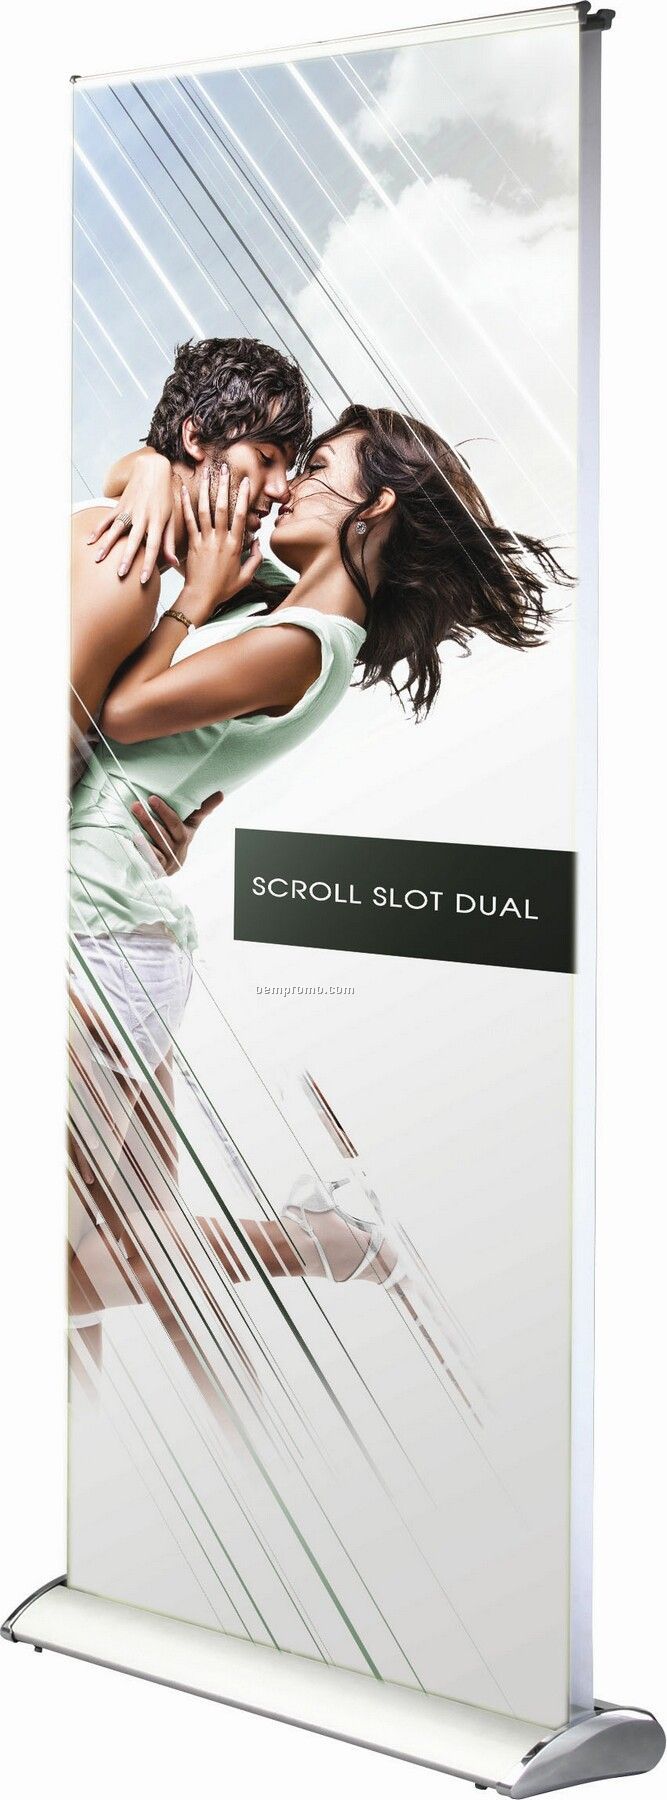 Scroll Slot Dual Bannerstand (39.4